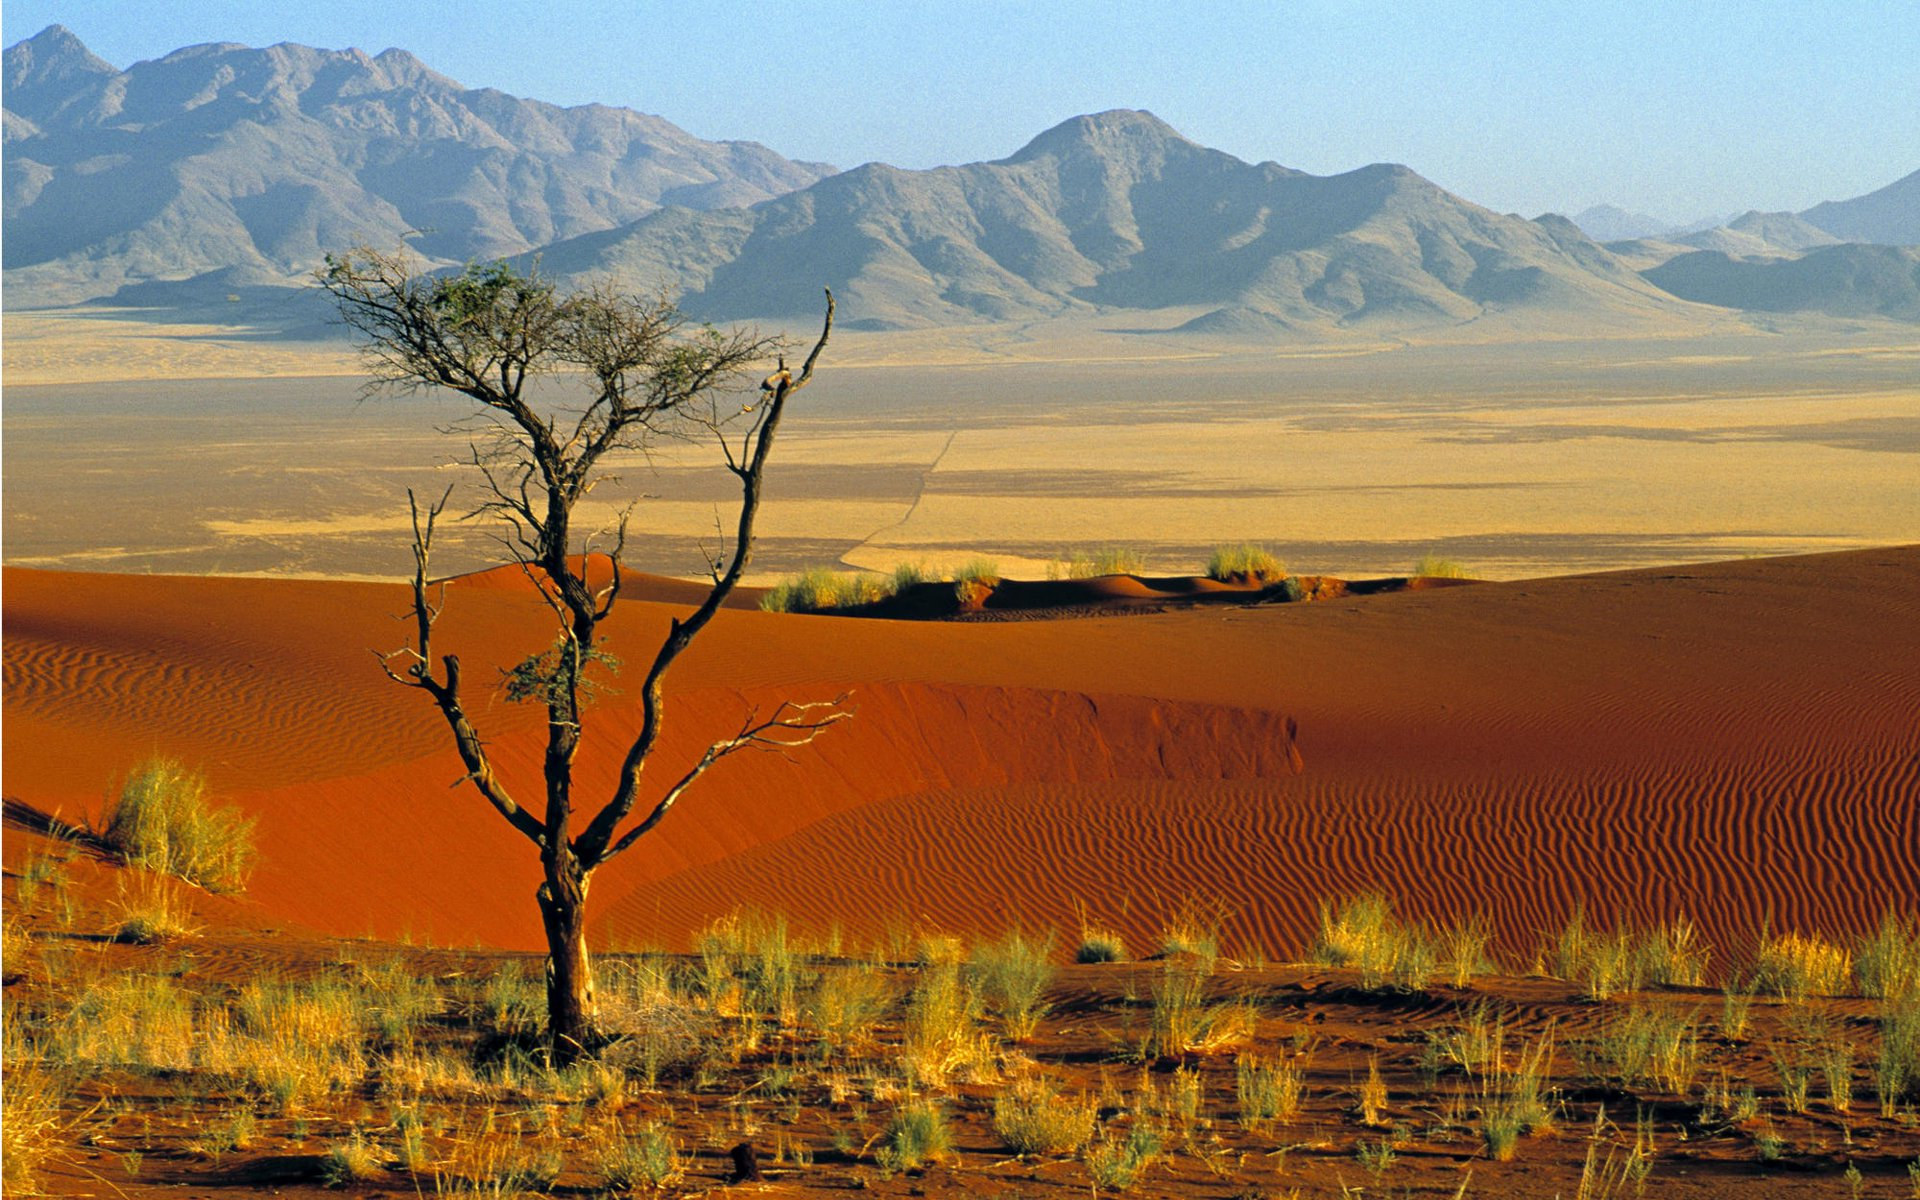 Namibrand Nature Reserve